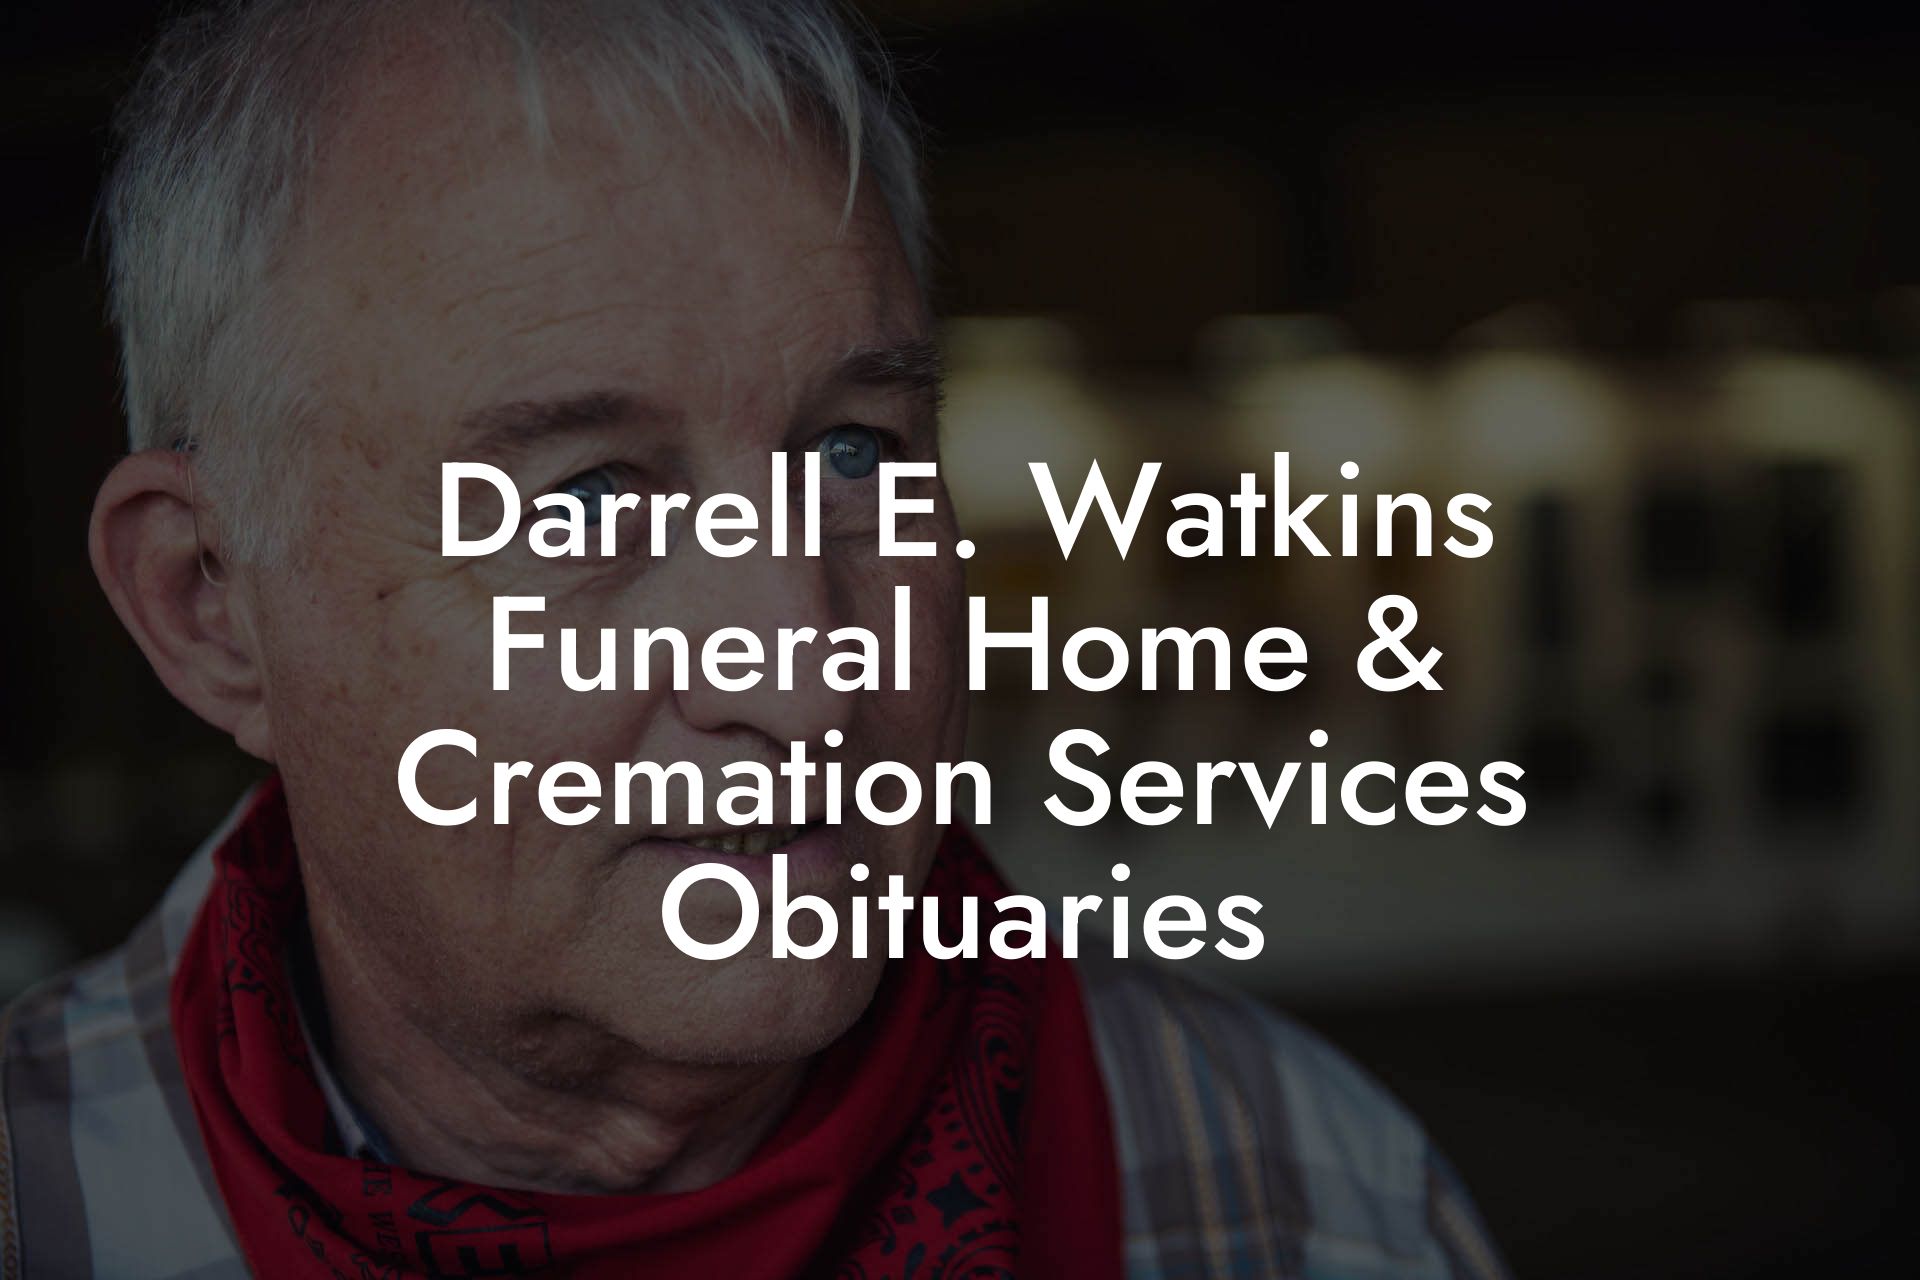 Darrell E. Watkins Funeral Home & Cremation Services Obituaries